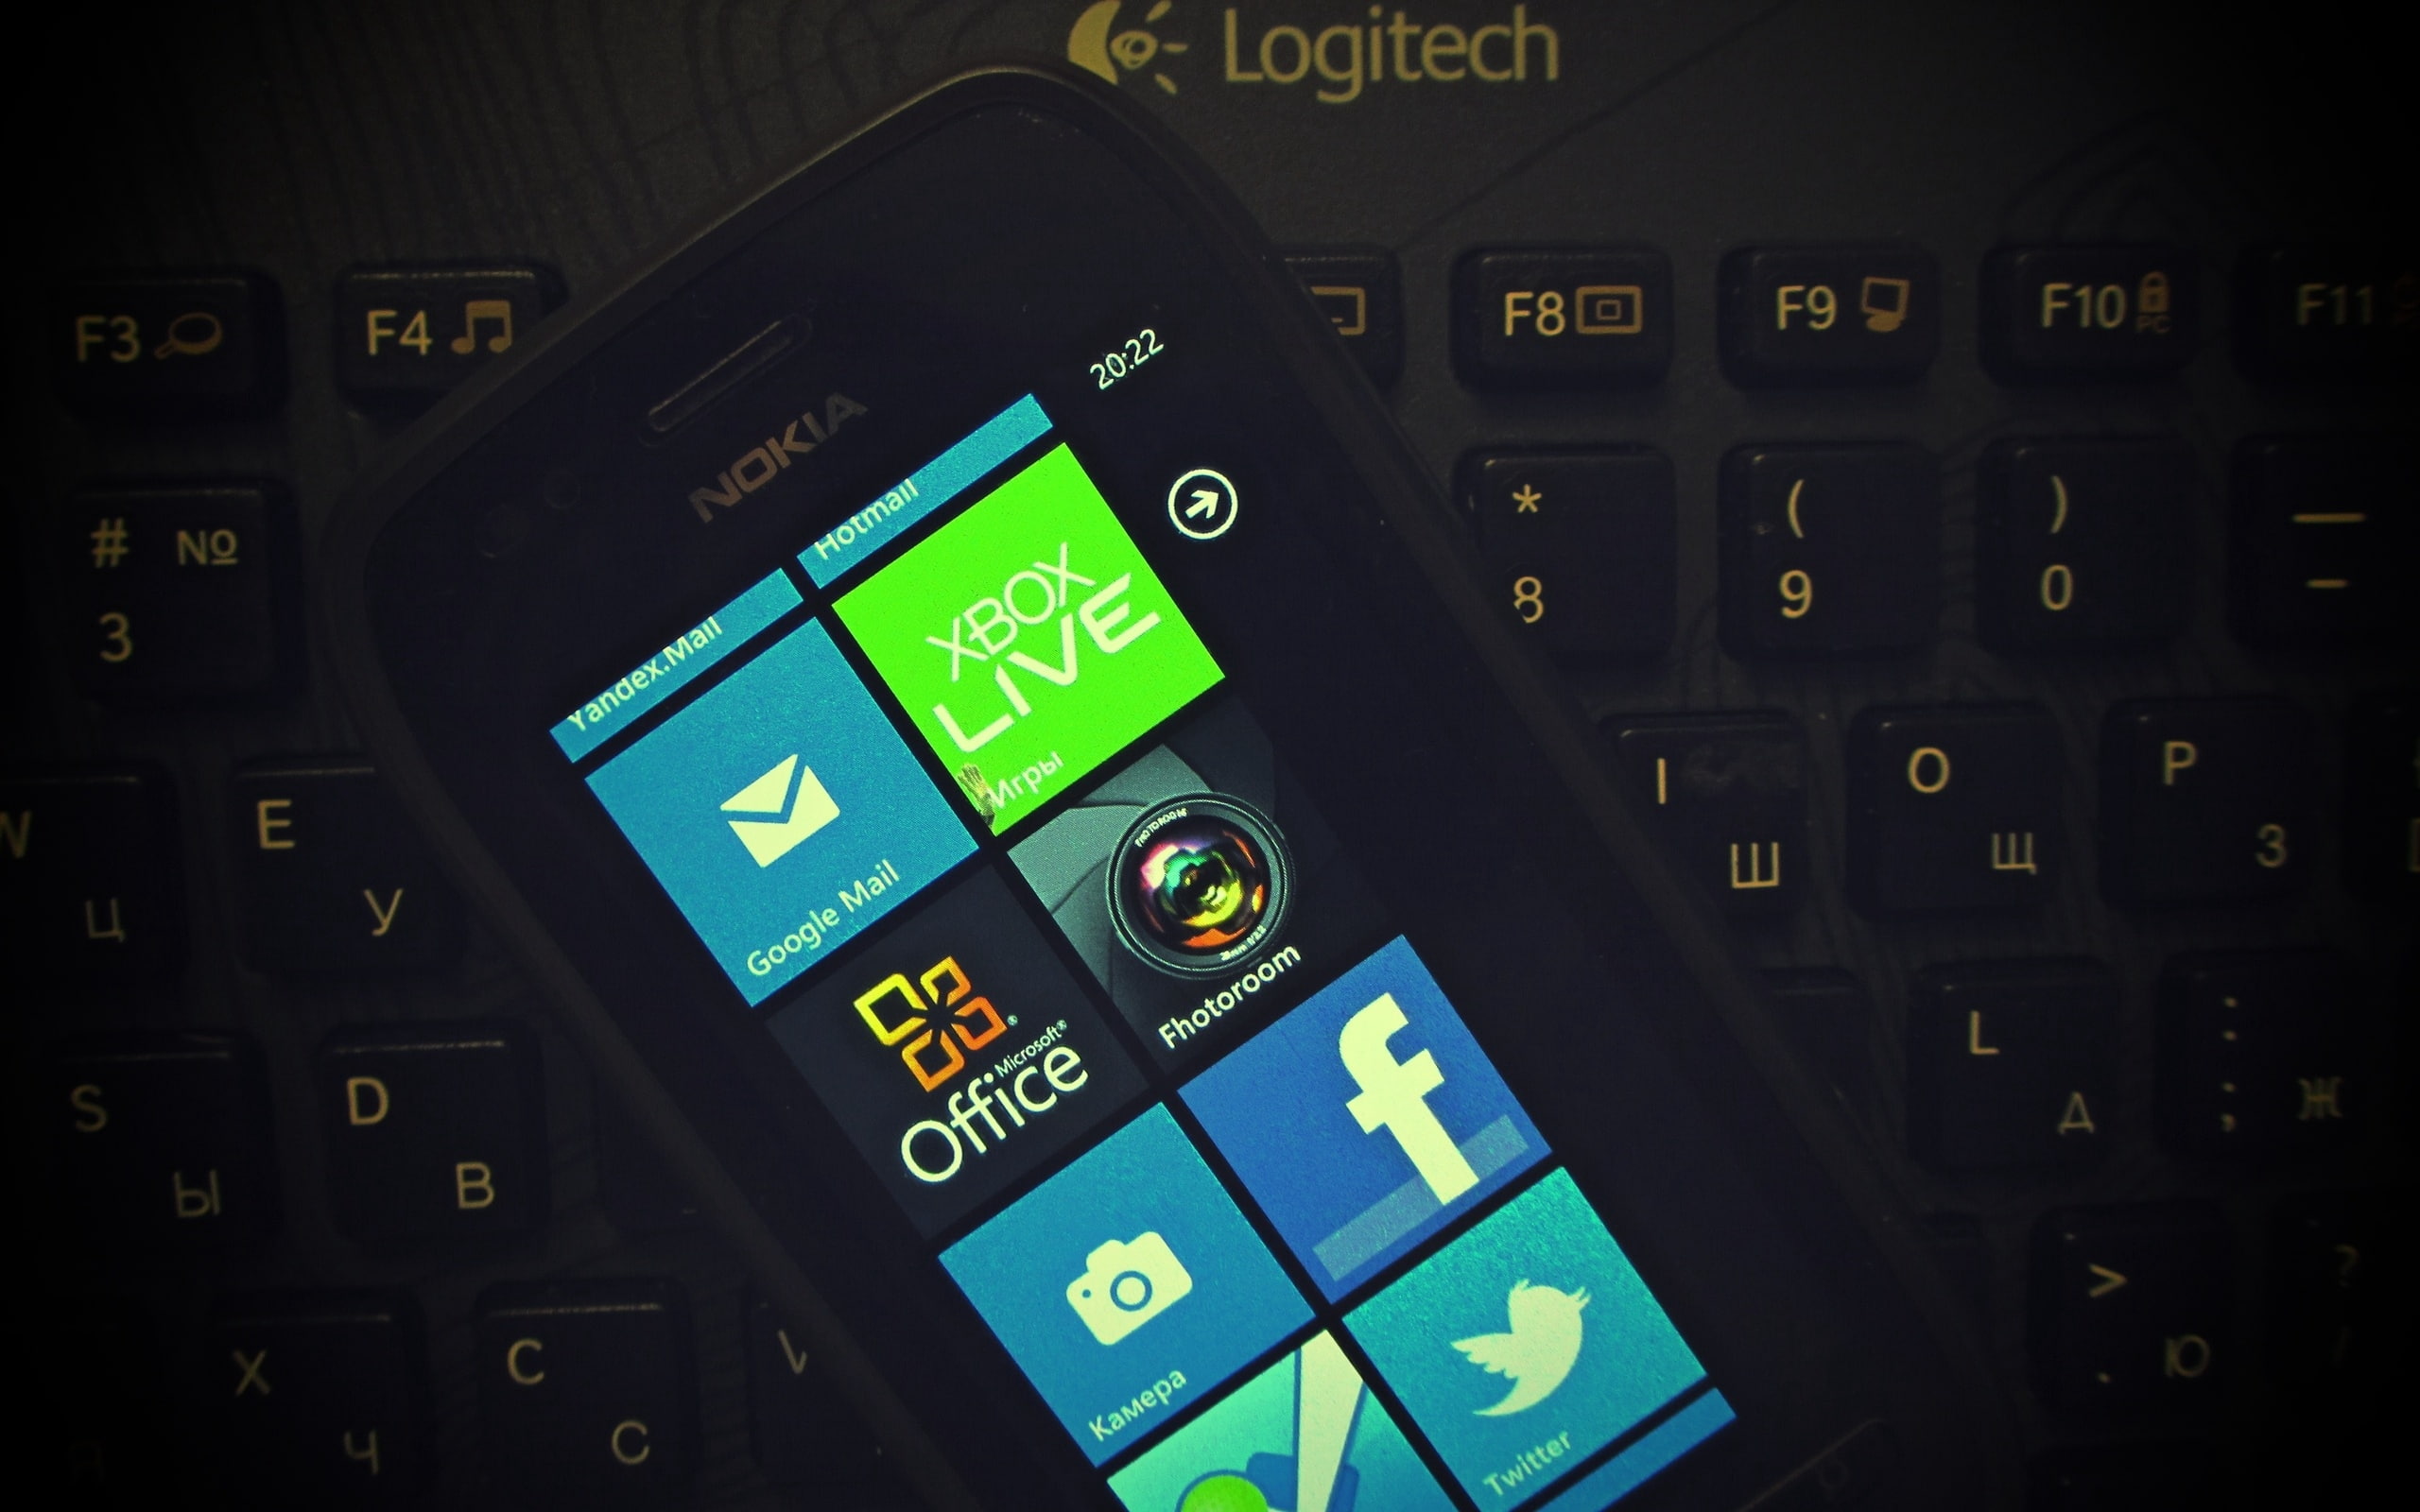 nokia, logitech, mobile phone, keyboard, touch screen